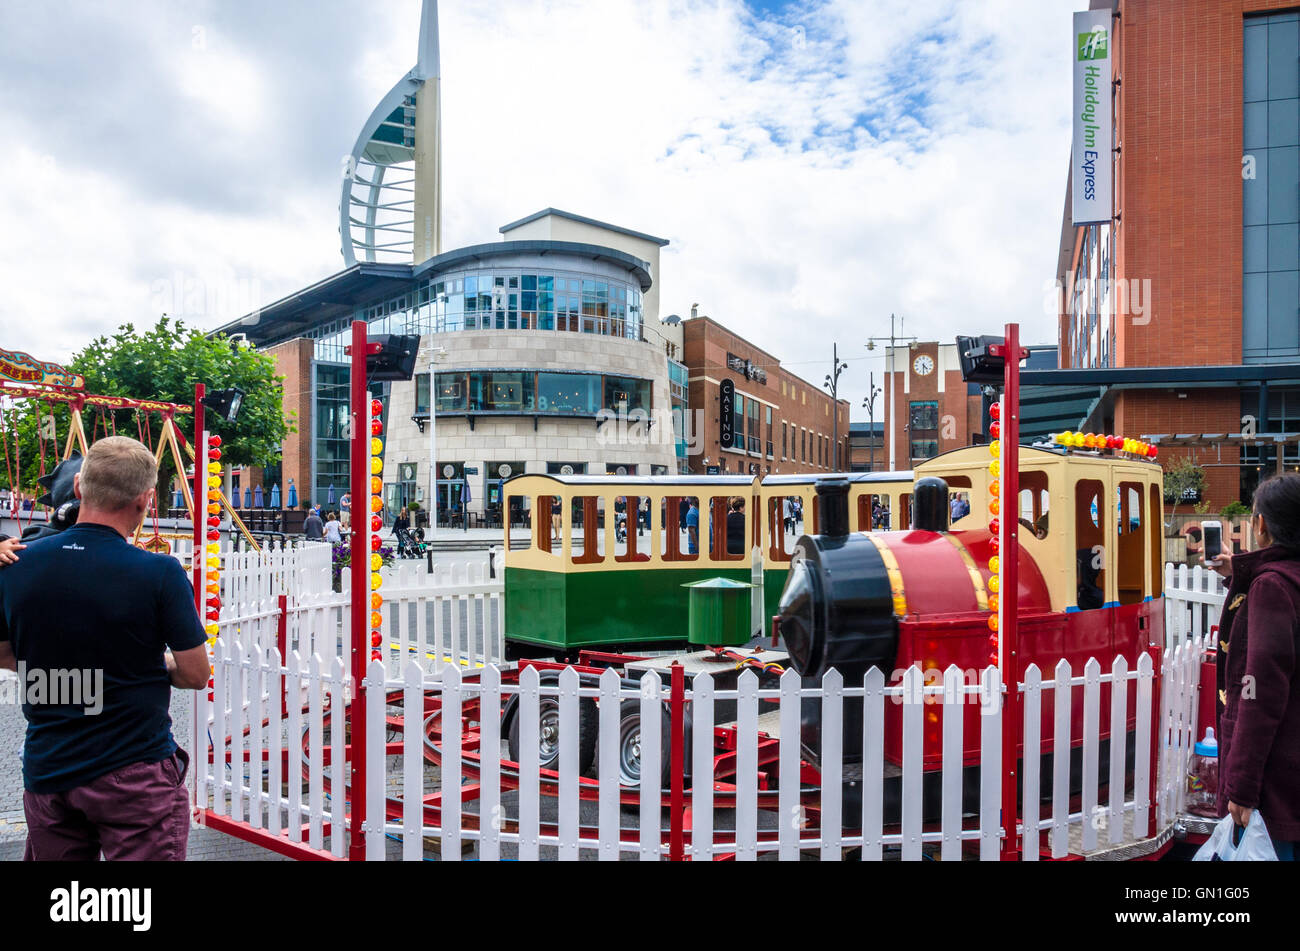 A children's train ride at a small fair at Gunwharf Quays in Portsmouth. Stock Photo